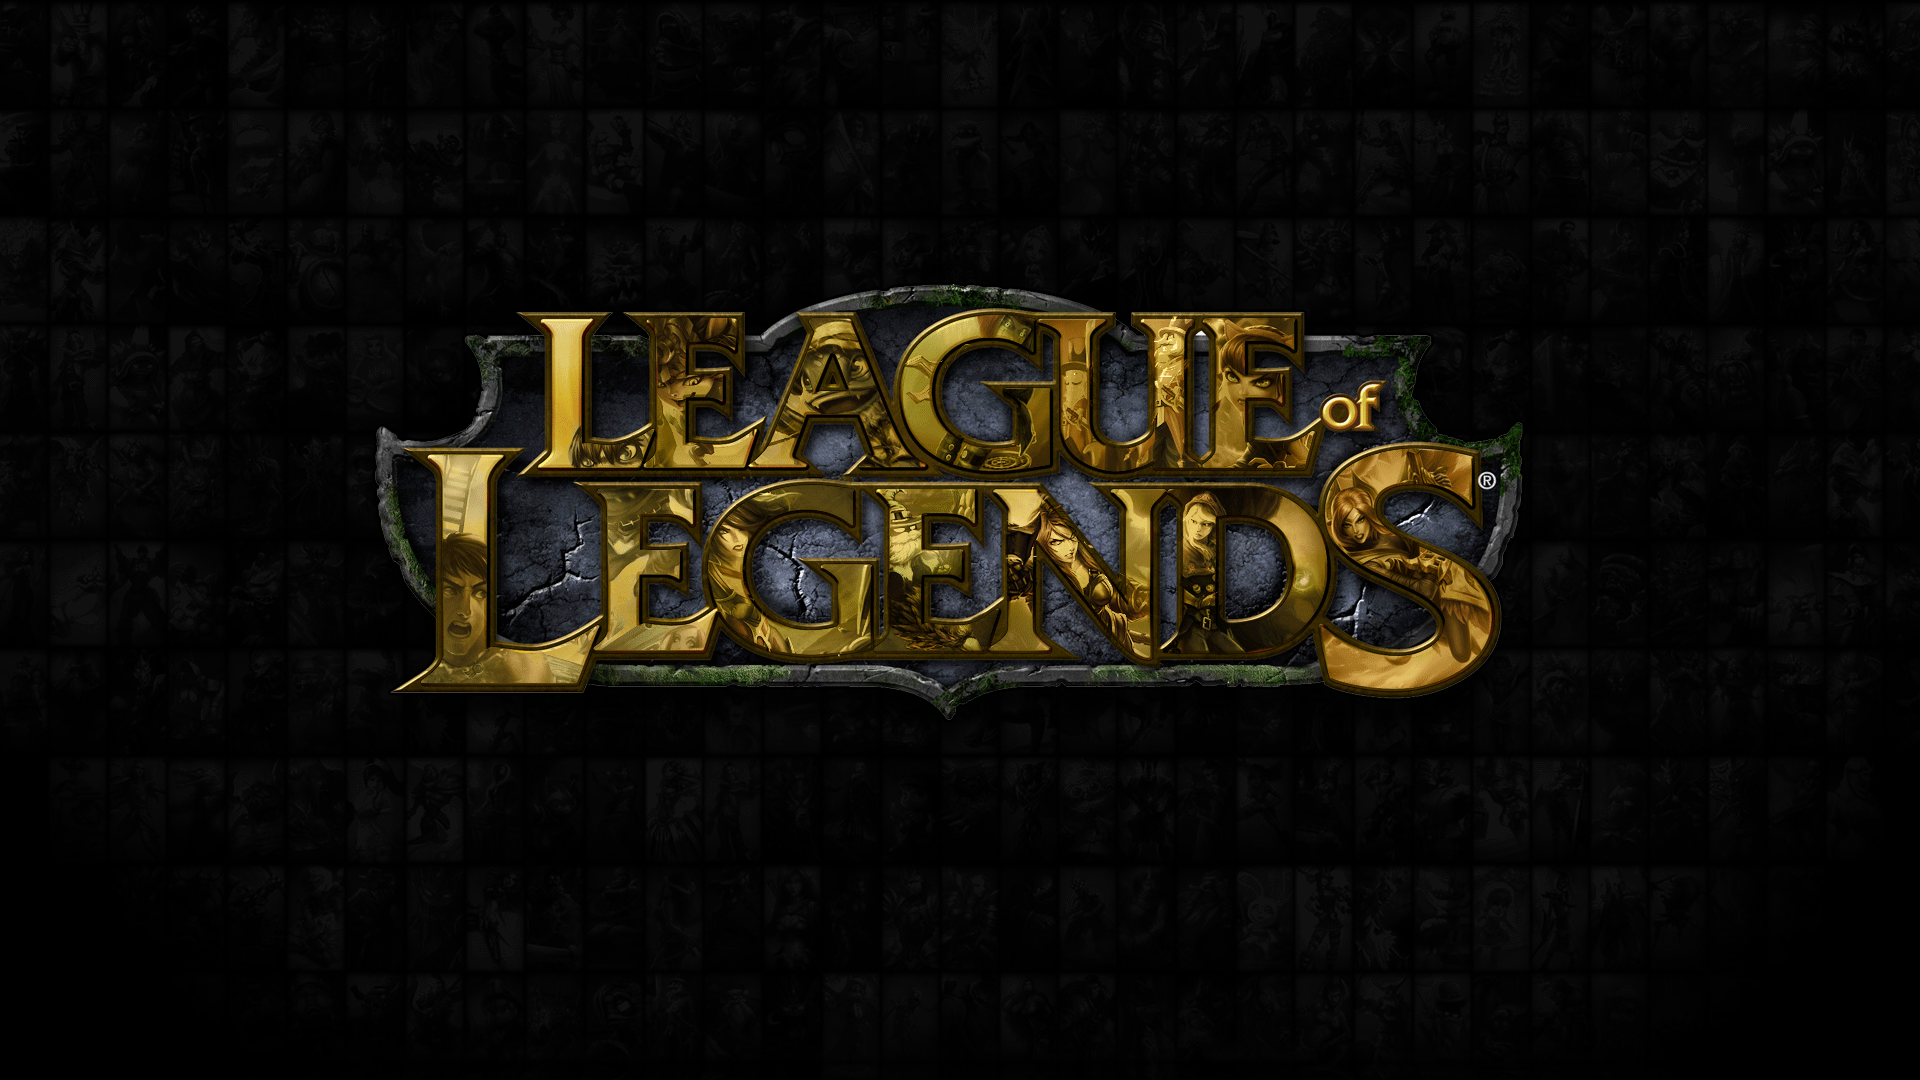 100+] League Of Legends Logo Wallpapers